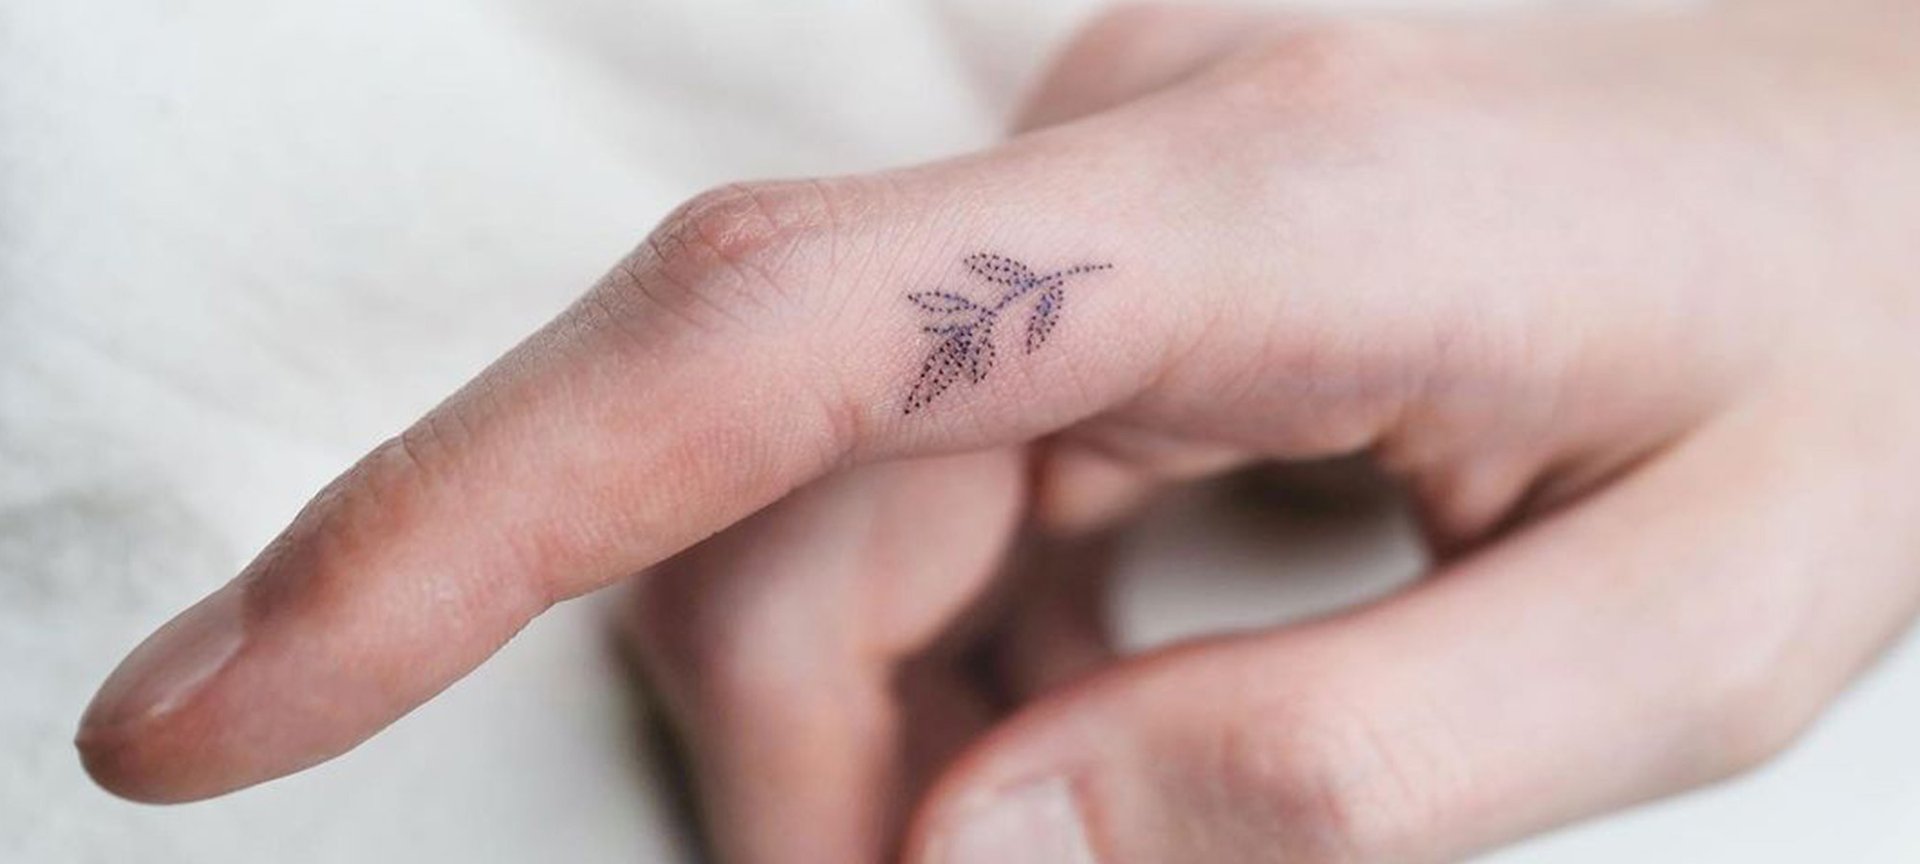 3RL finger webbing tattoo on myself  rsticknpokes